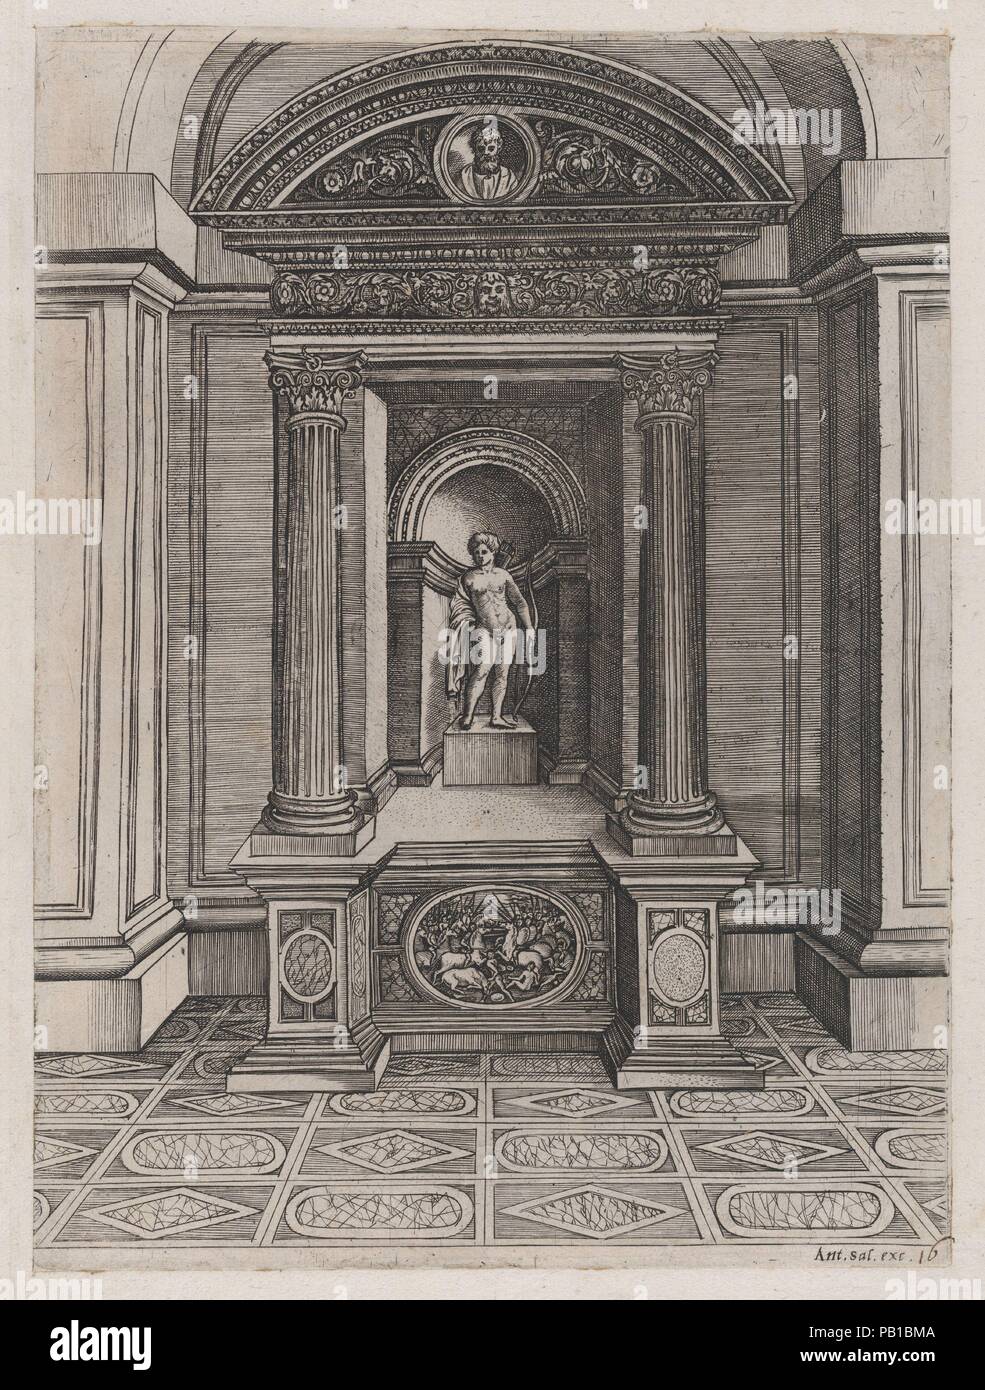 Speculum Romanae Magnificentiae : l'autel de l'Eros. Artiste : attribué à Agostino Veneziano (Agostino dei Musi) (Italien, Venise ca. 1490-après 1536) ; Après Rome ( ?) Raphaël (Raffaello Sanzio ou Santi) (Italien, Urbino 1483-1520 Rome). Dimensions : support : 17 x 11 15/16 13/16 in. (45,5 x 30 cm) Fiche technique : 11 5/8 x 8 2/13 in. (29,5 x 22 cm). Editeur : Antonio Salamanca Salamanca (1478-1562) de Rome. Series/portefeuille : Speculum Romanae Magnificentiae. Date : ca. 1514-36. Cette impression vient de la copie du musée du Speculum Romanae Magnificentiae (le miroir de la Magnificence romaine) Le Speculum trouvés Banque D'Images